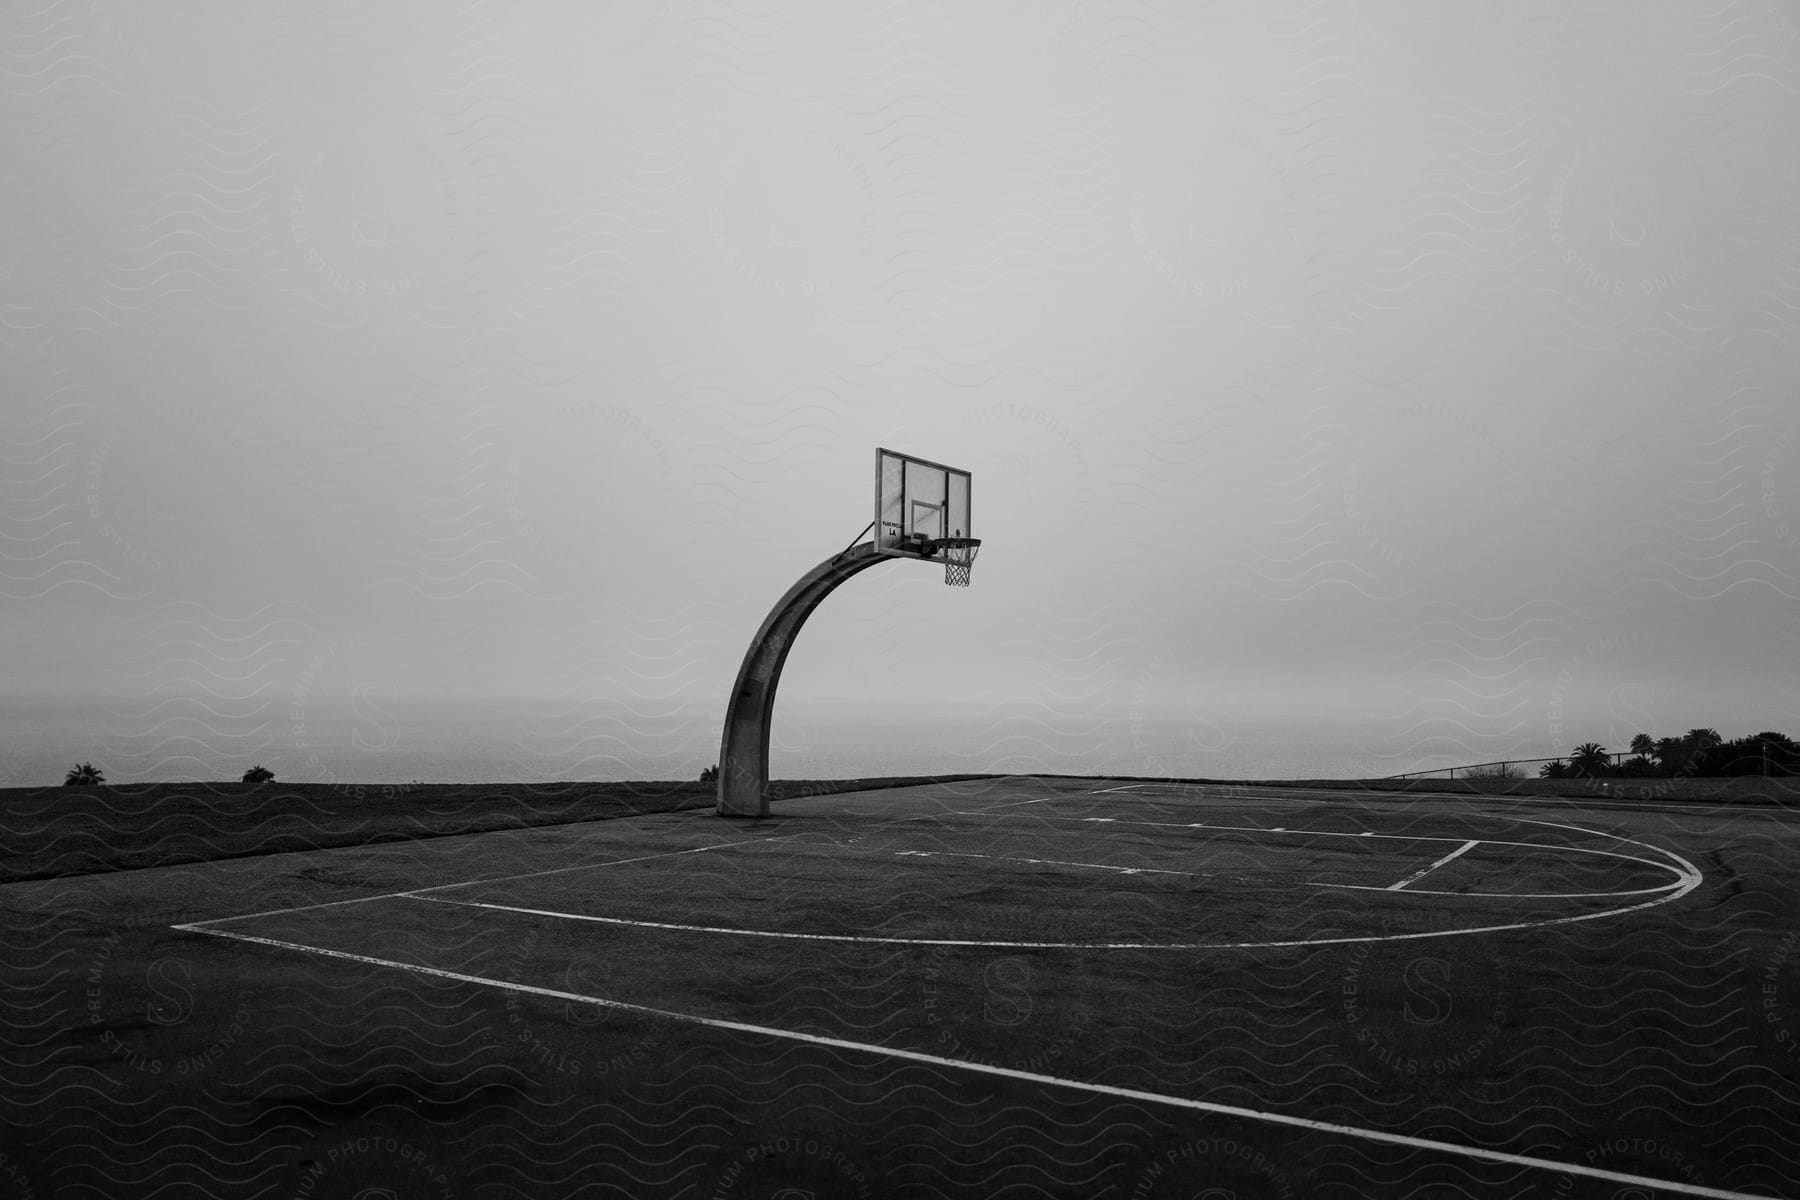 A basketball hoop hangs over an empty court along the coast